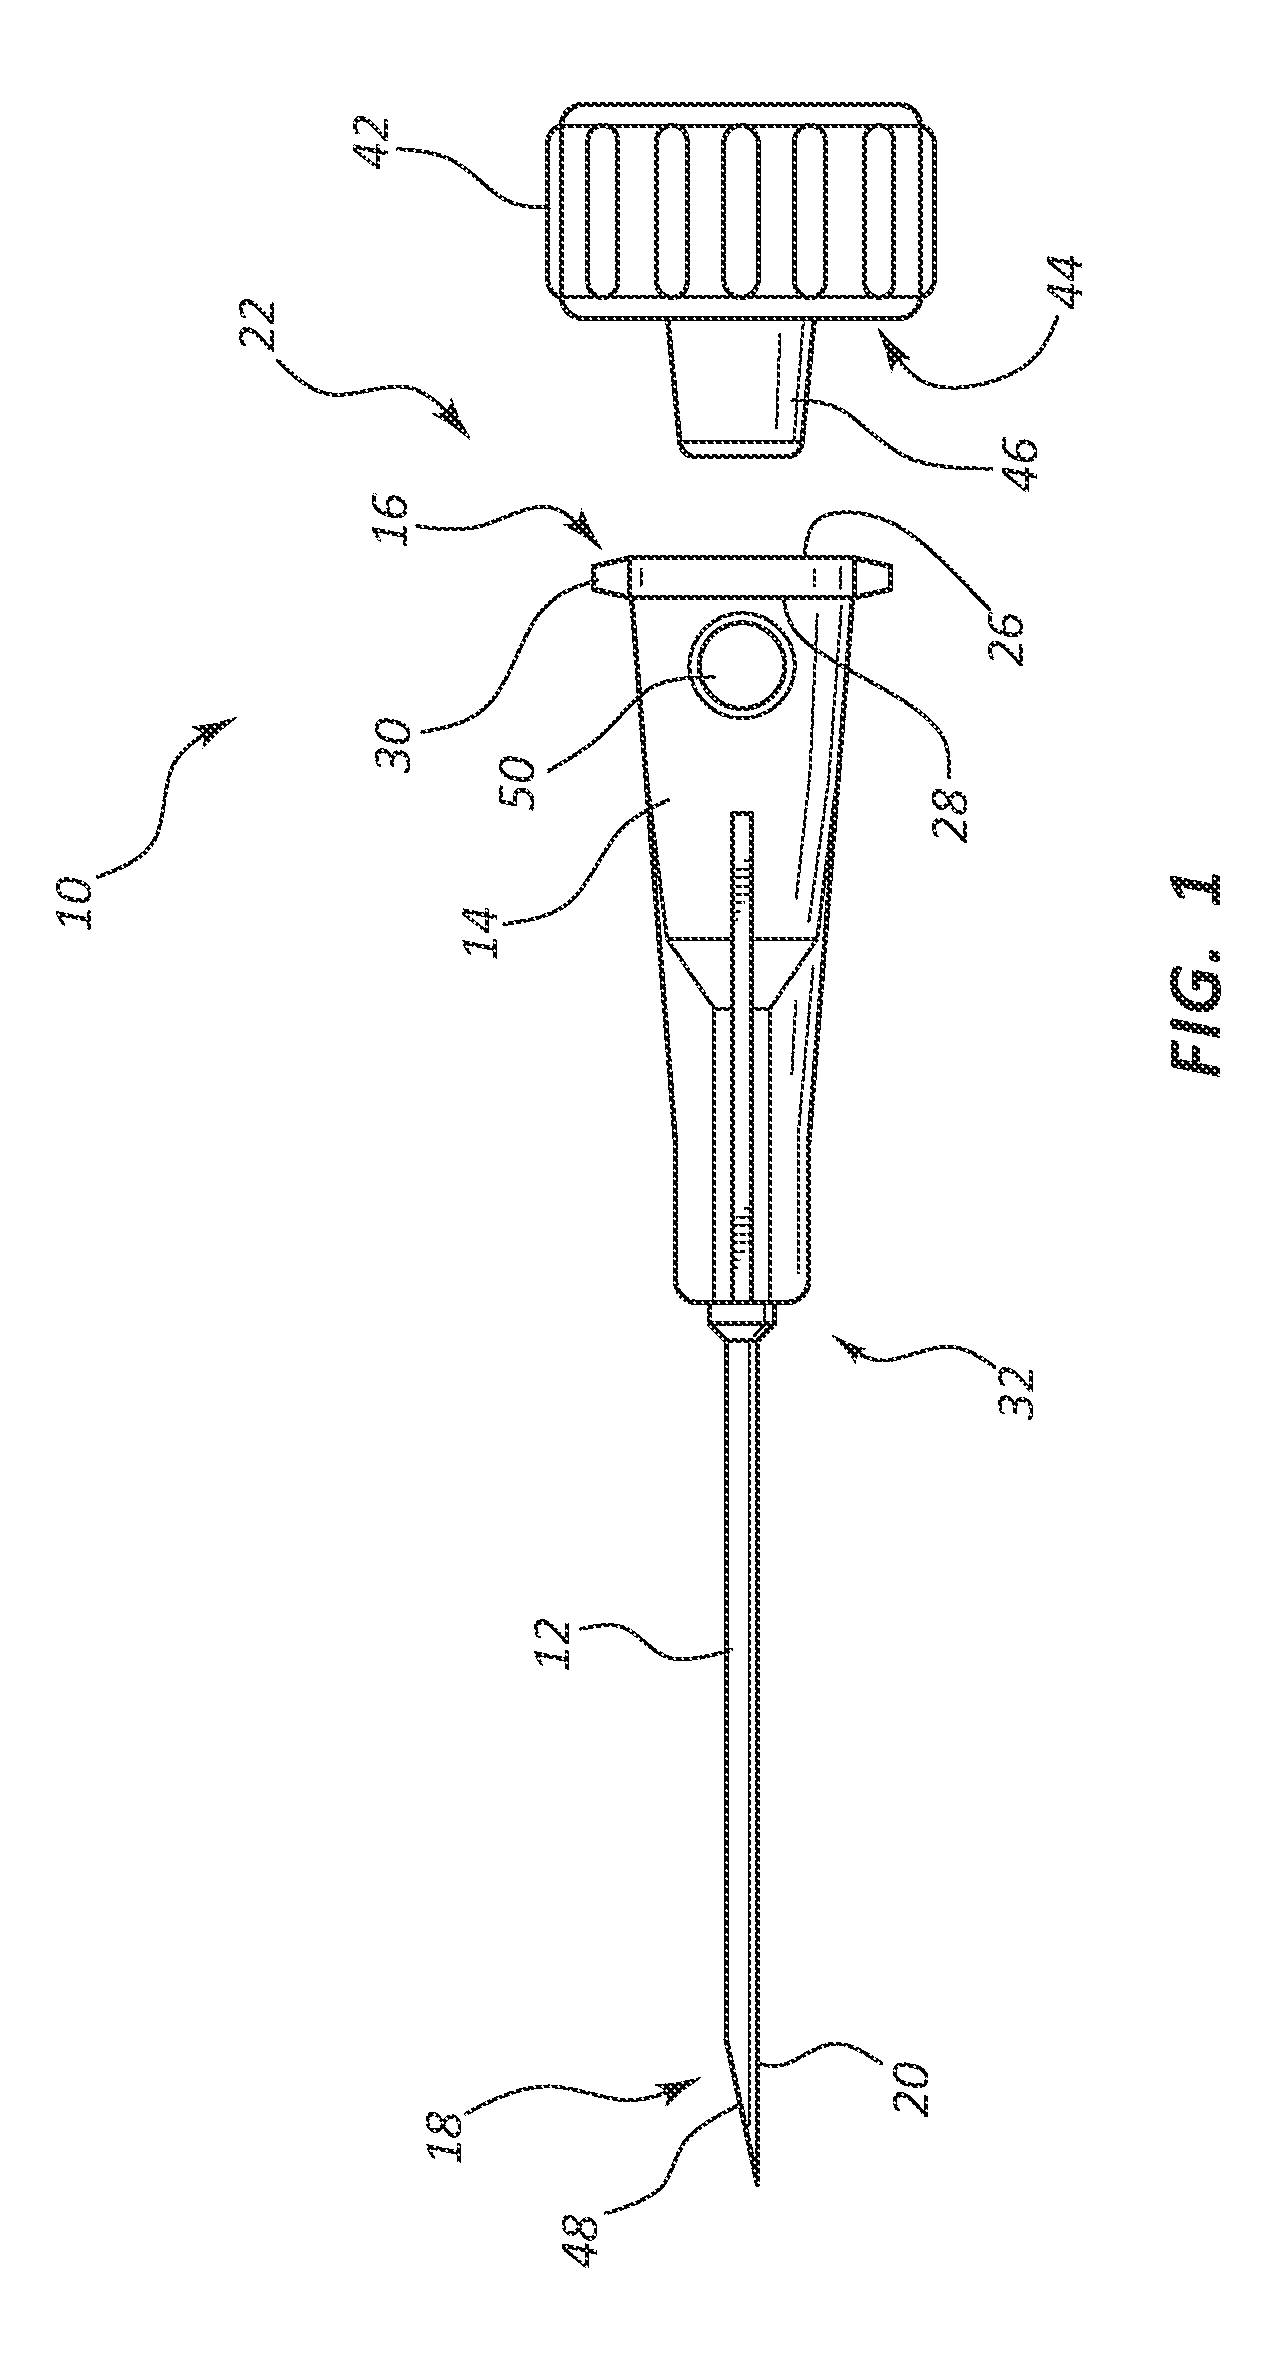 Intravenous catheter with duckbill valve